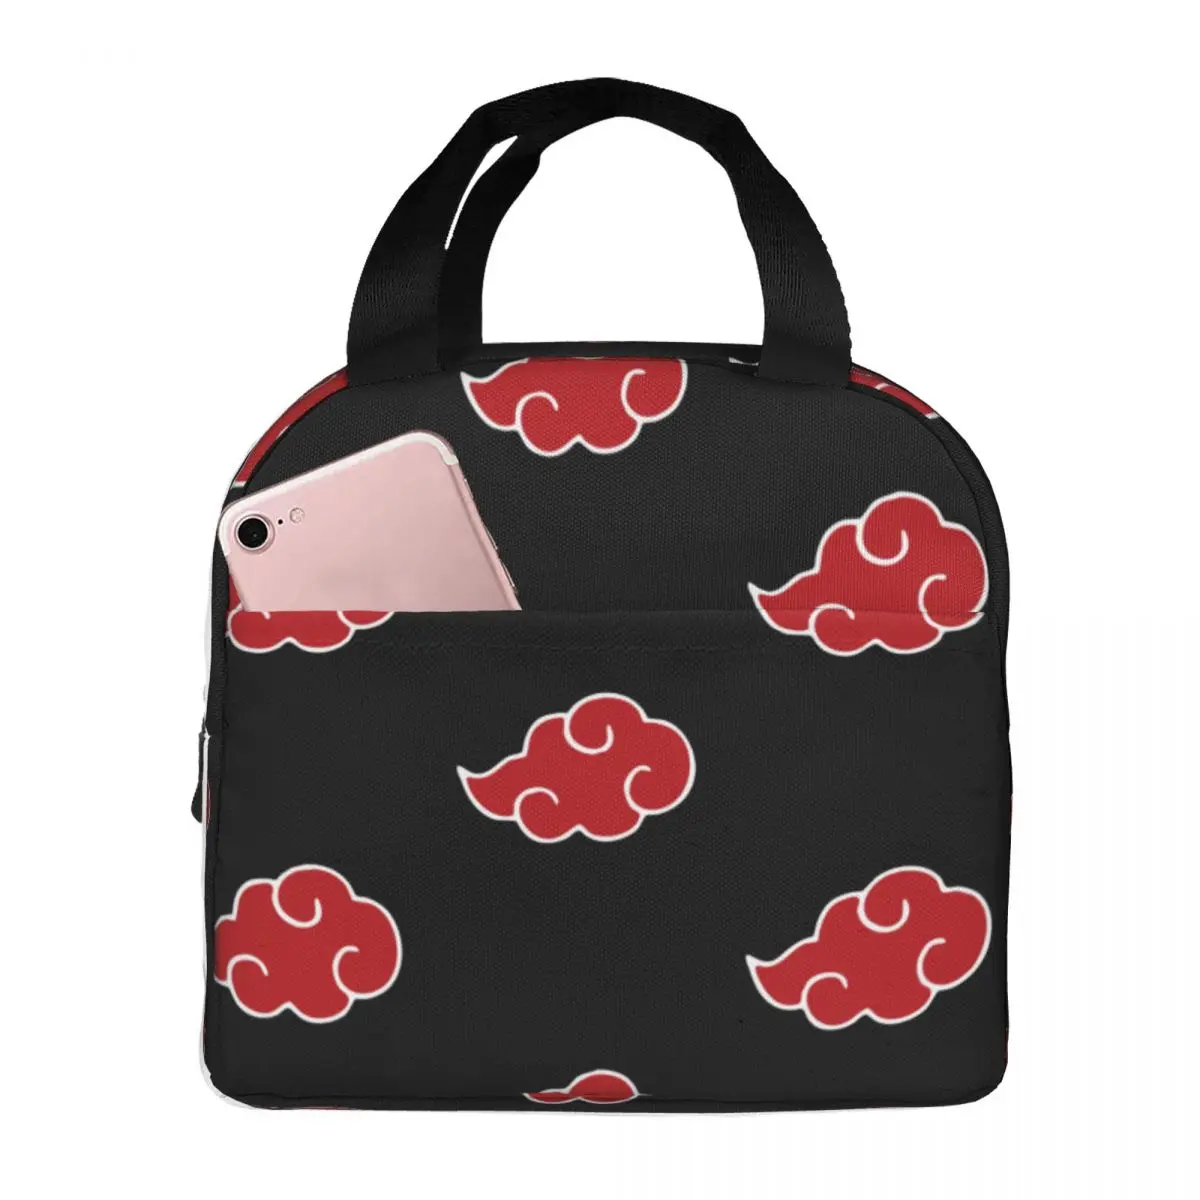 Lunch Bags for Men Women Anime Red Cloud Akatsuki Insulated Cooler Waterproof Picnic Japan Manga Lunch Box Food Storage Bags